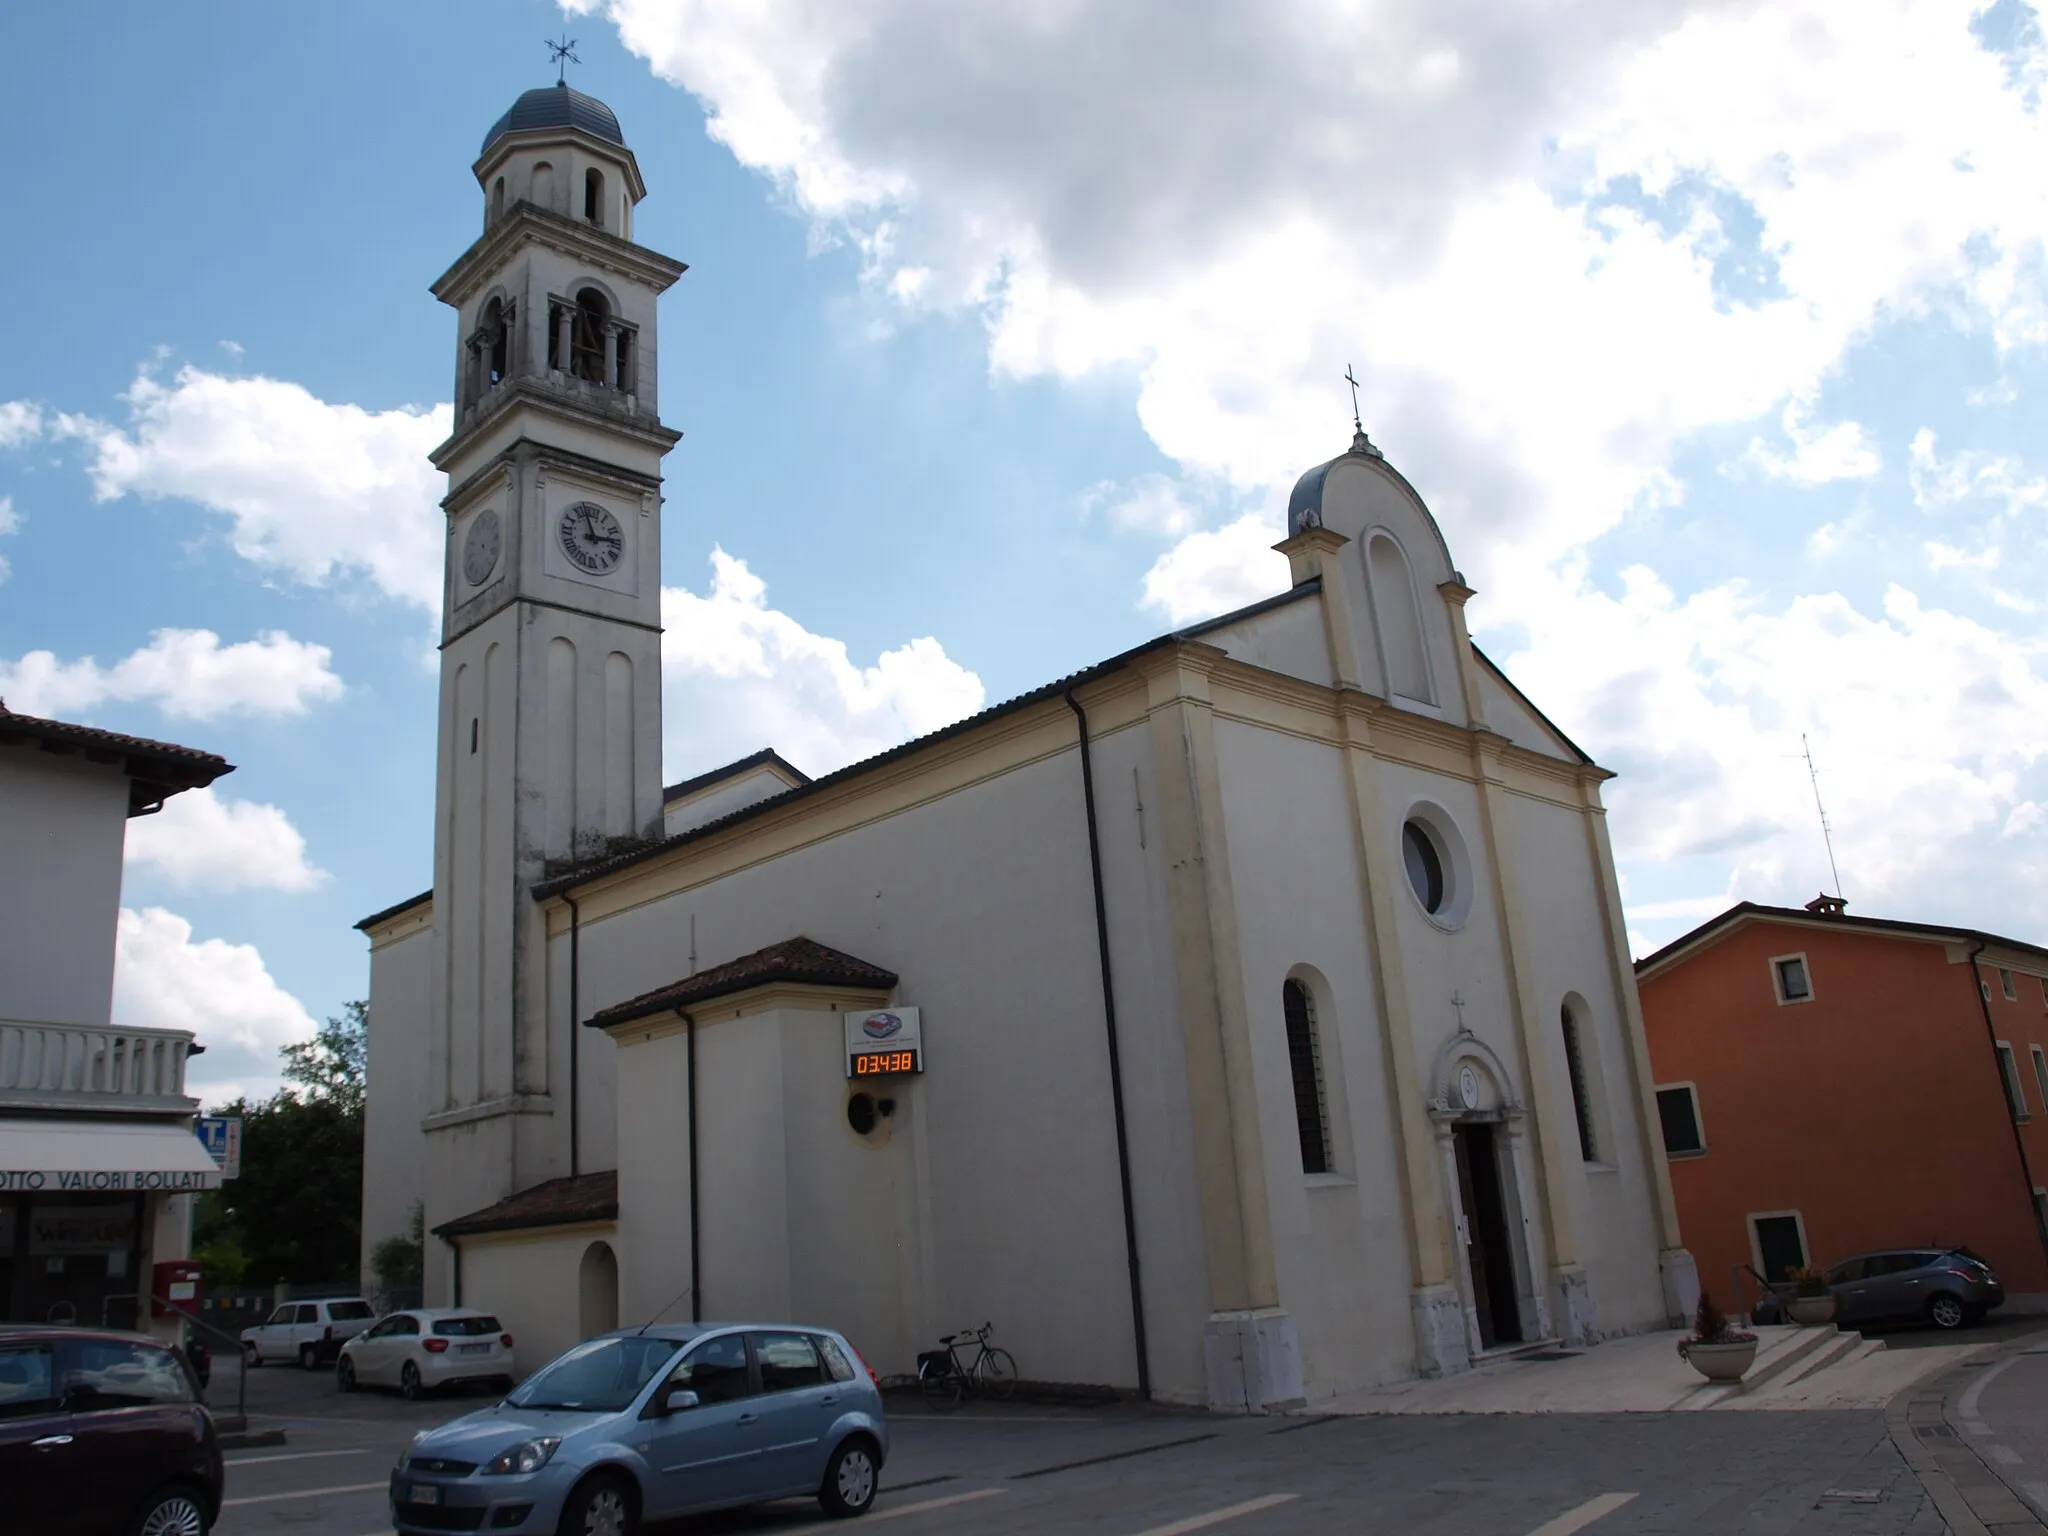 Photo showing: The chiesa dei Santi Giacomo e Nicolò (Saints James and Nicolas church) in Brugnera, in Northeast Italy.